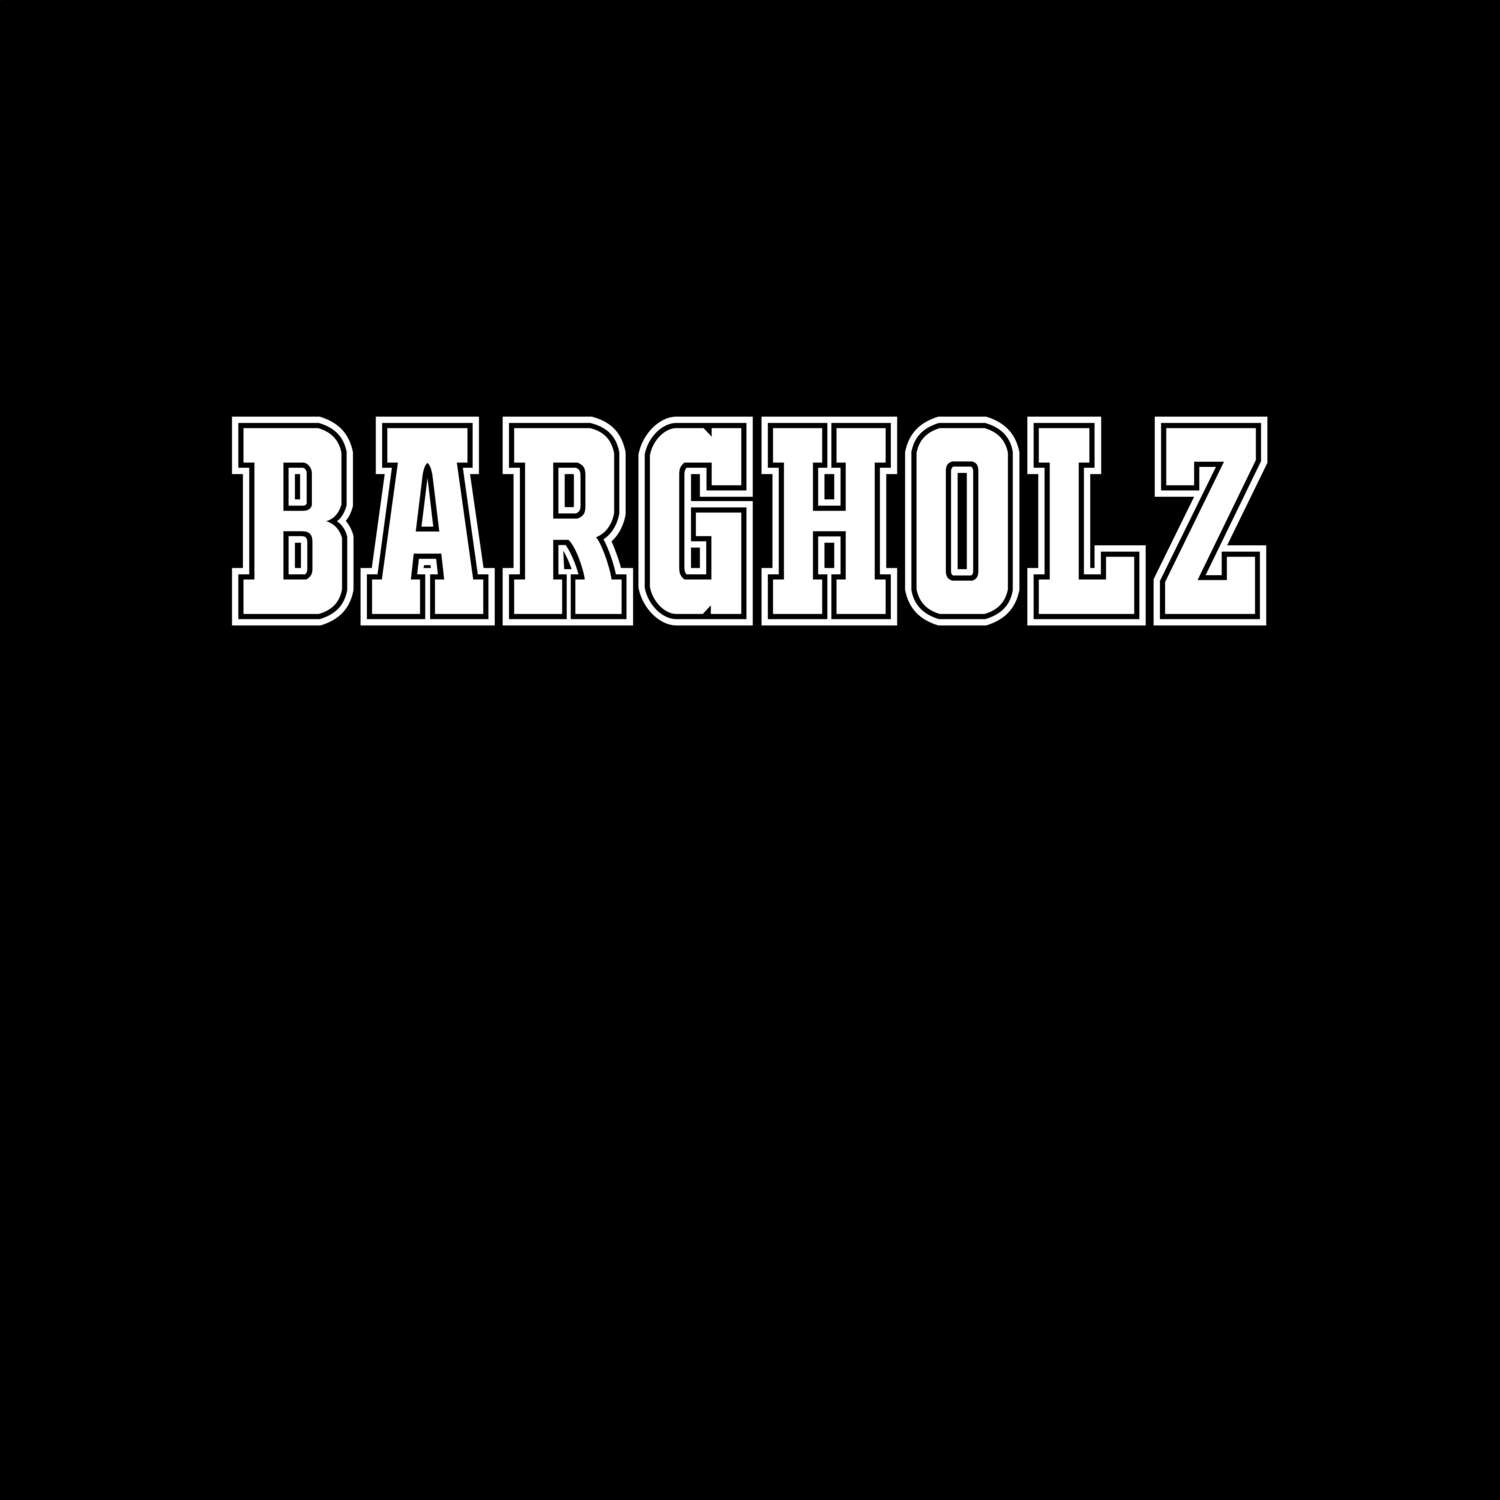 Bargholz T-Shirt »Classic«